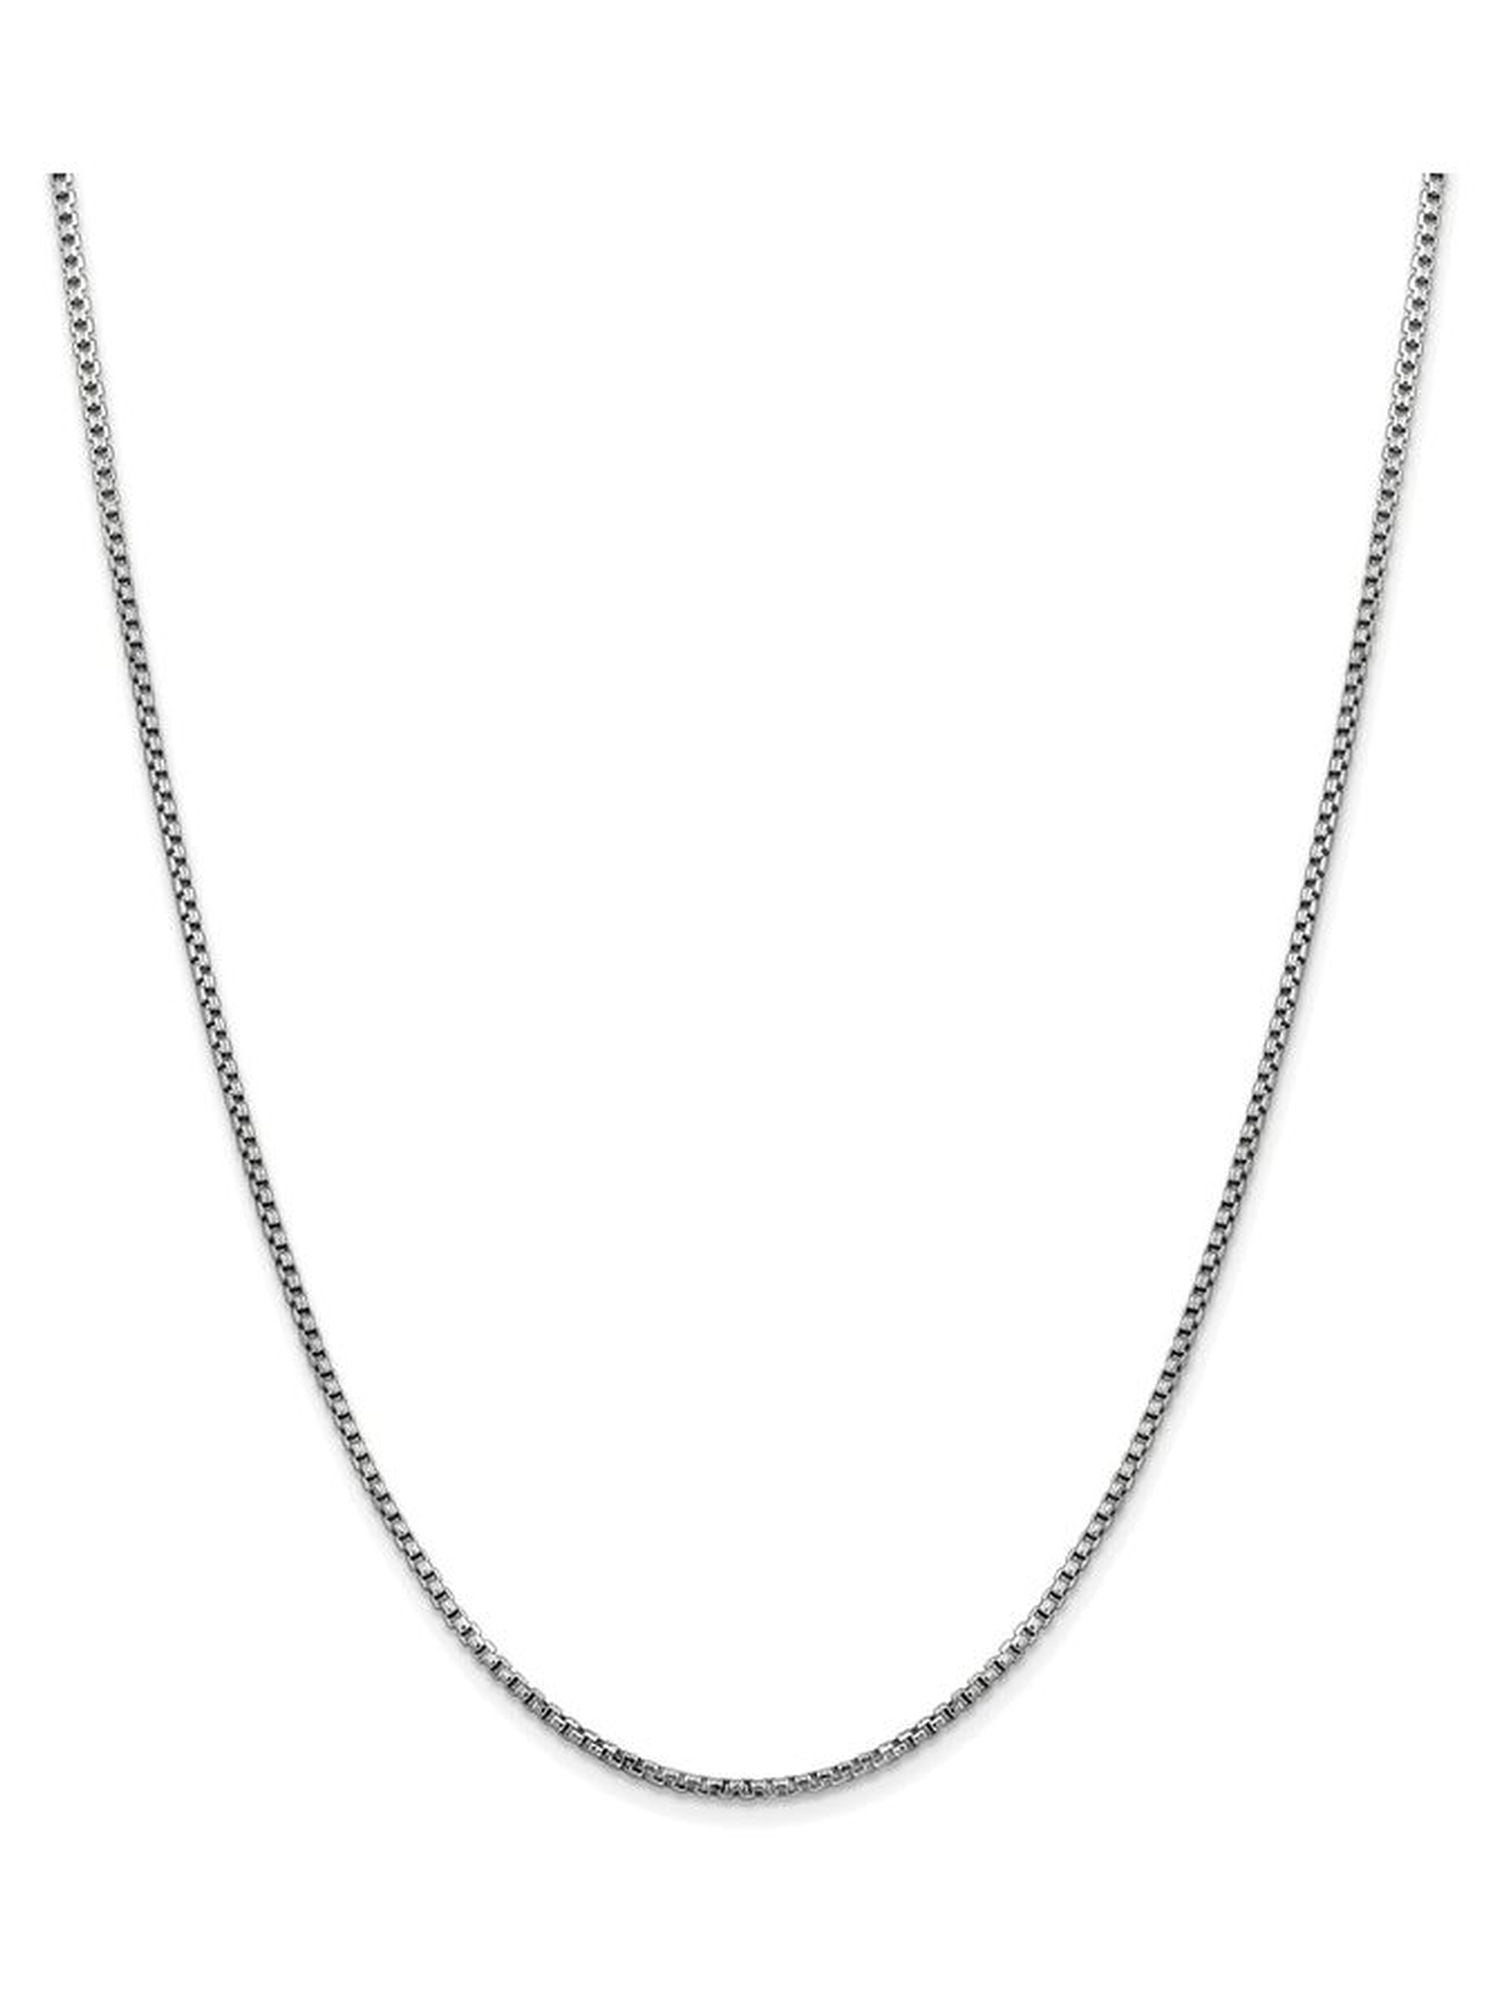 JewelryWeb - Finejewelers 16 Inch 14k White Gold 1.75mm Round Box Chain